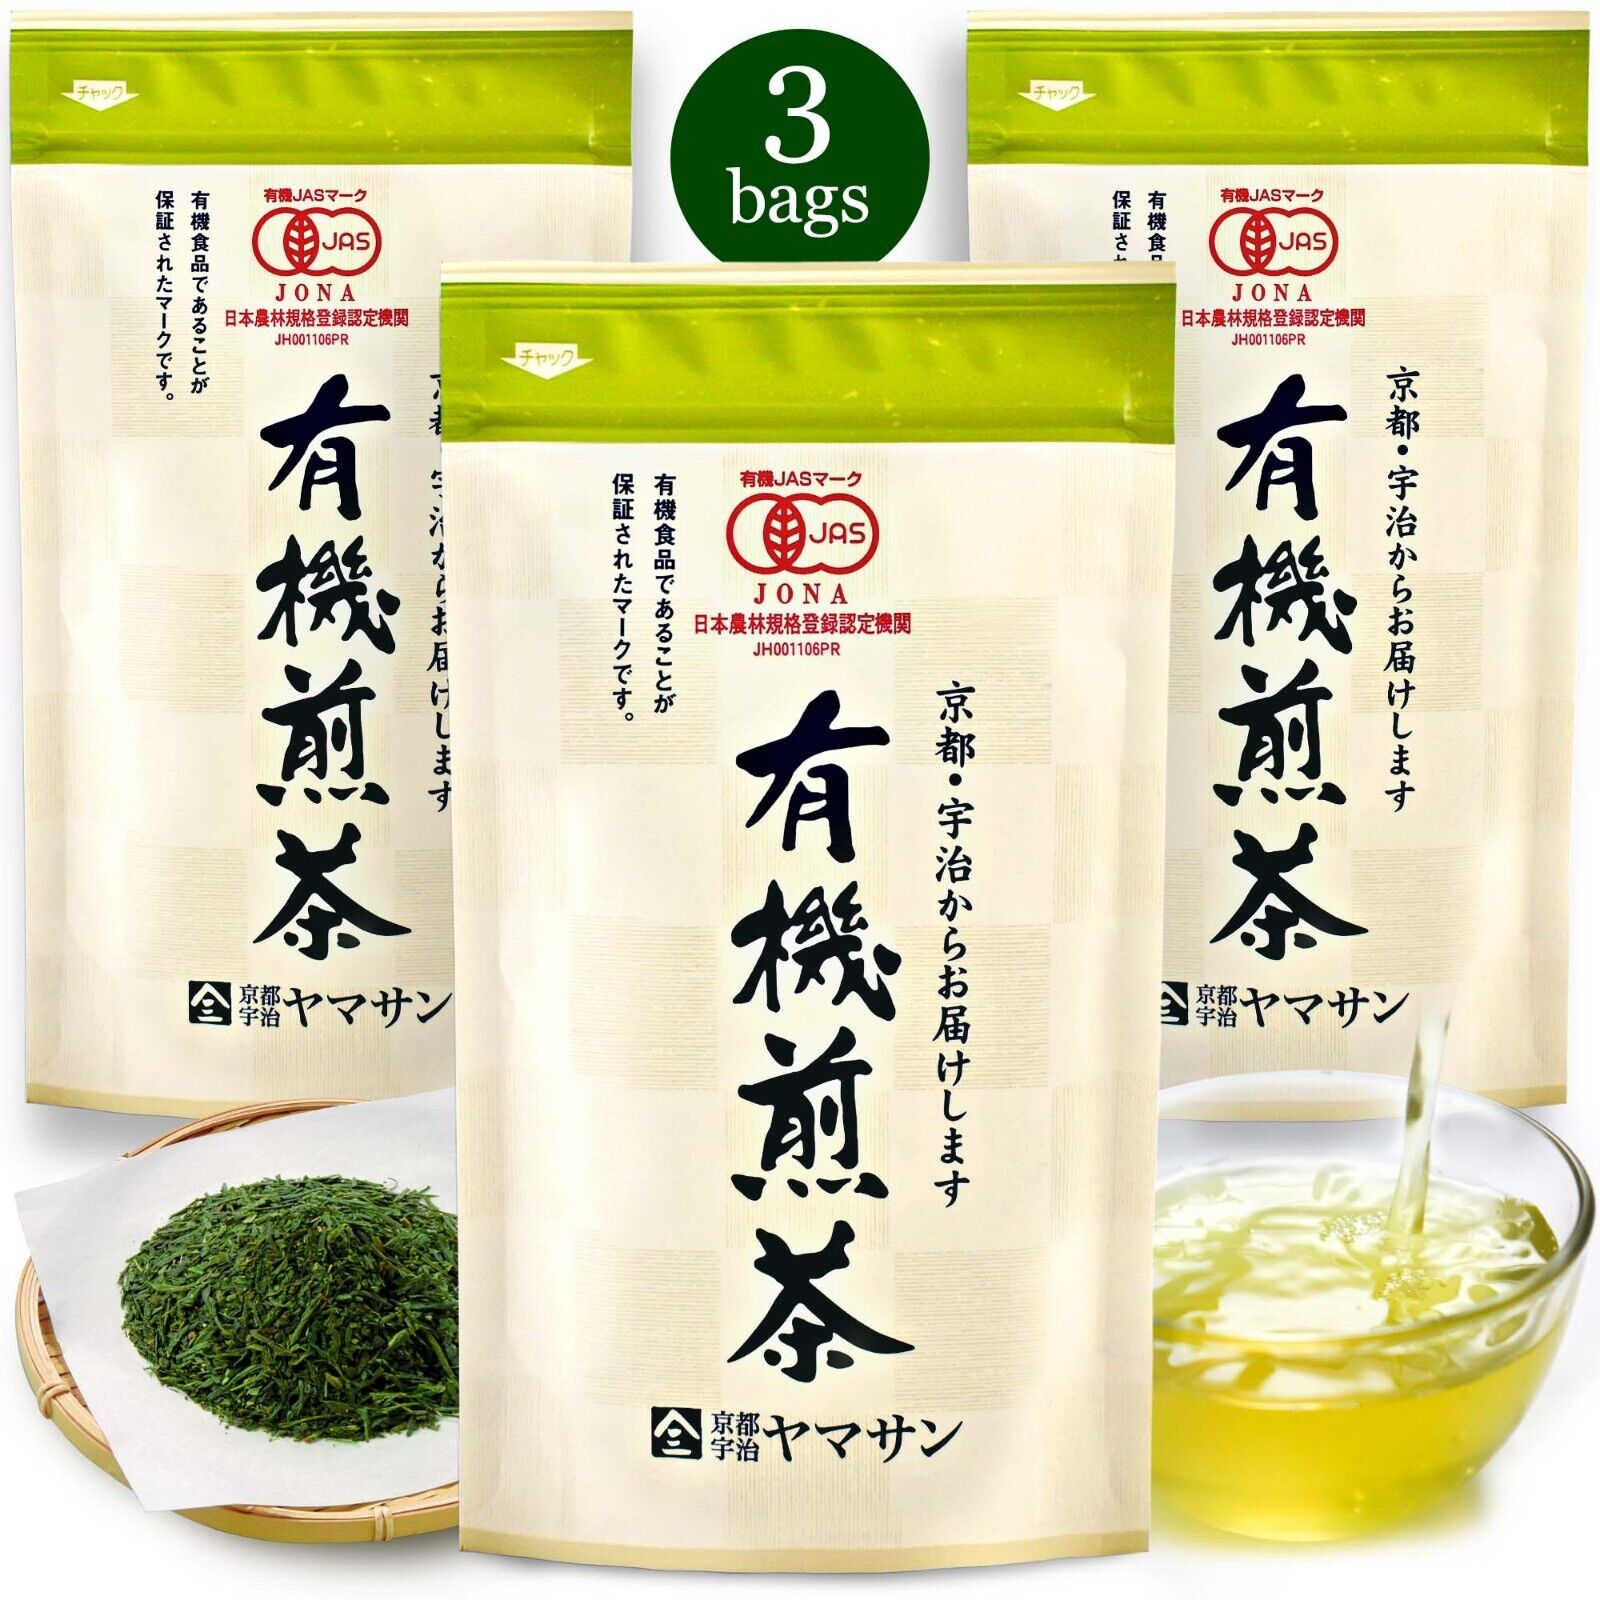 Japanese Organic Green Tea Sencha Loose Leaf 80gx3bags JAS Organic Certification